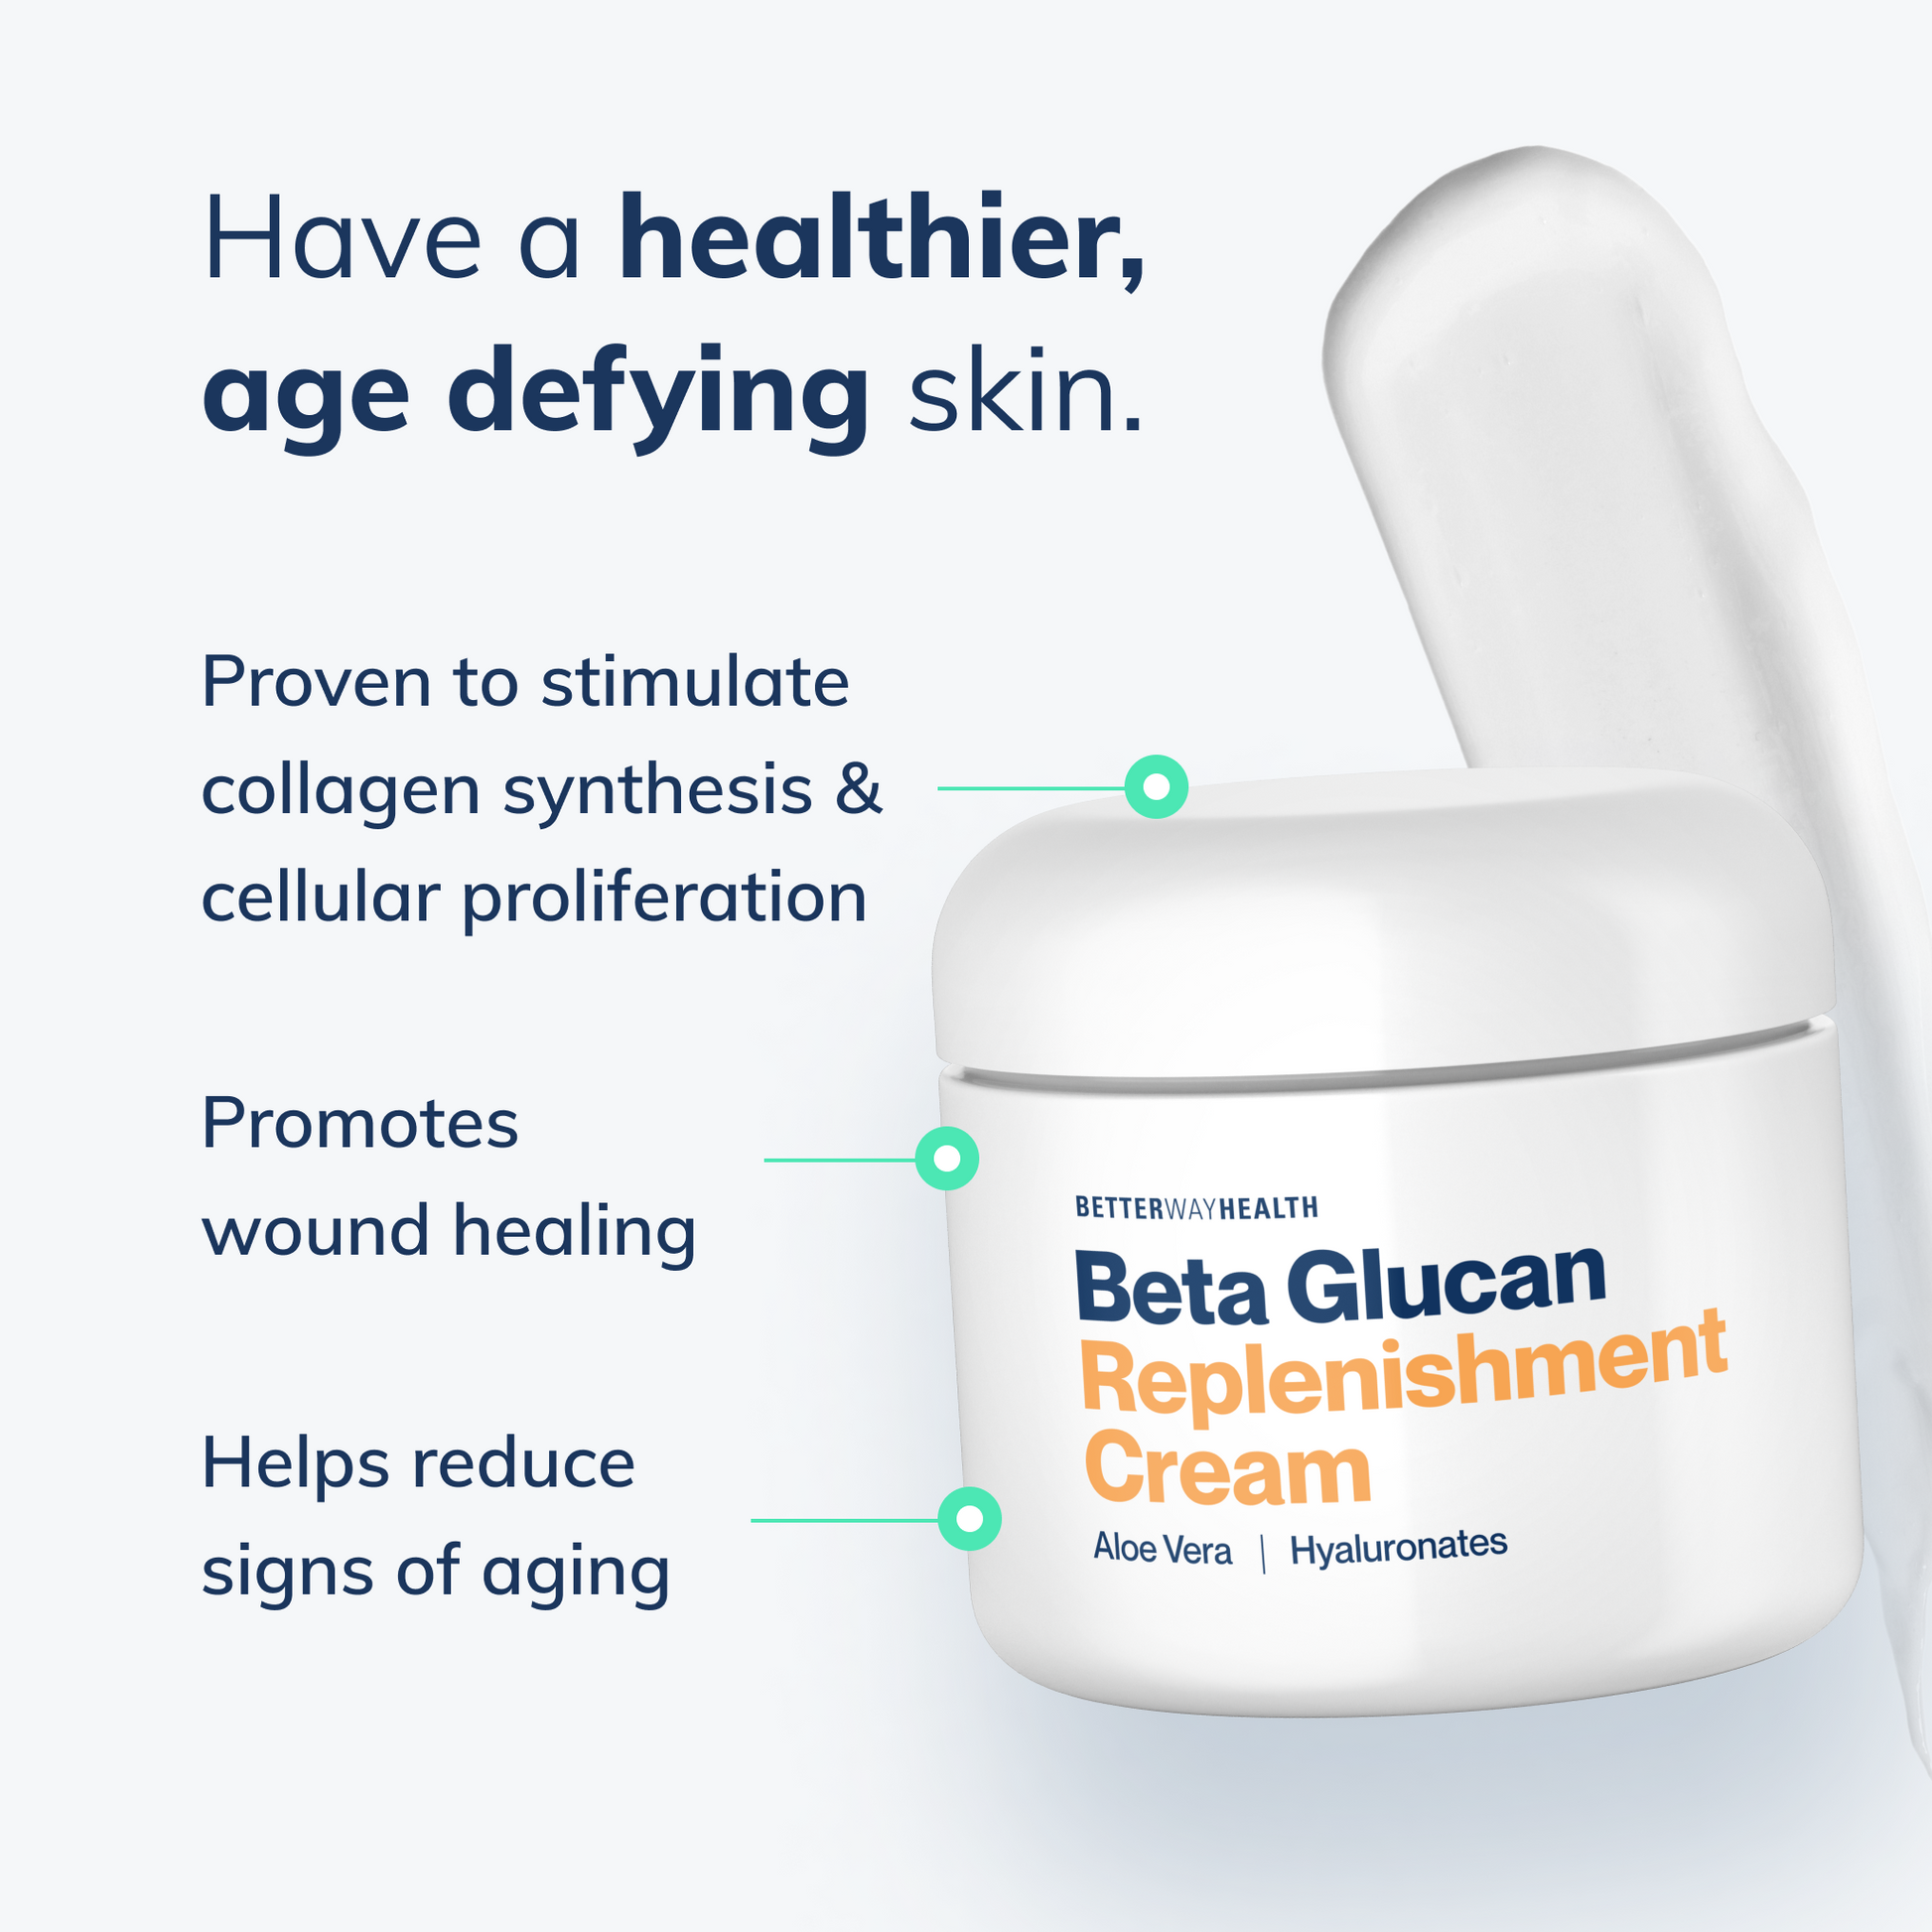 graphic outlining skin benefits of beta glucan cream - buy online today